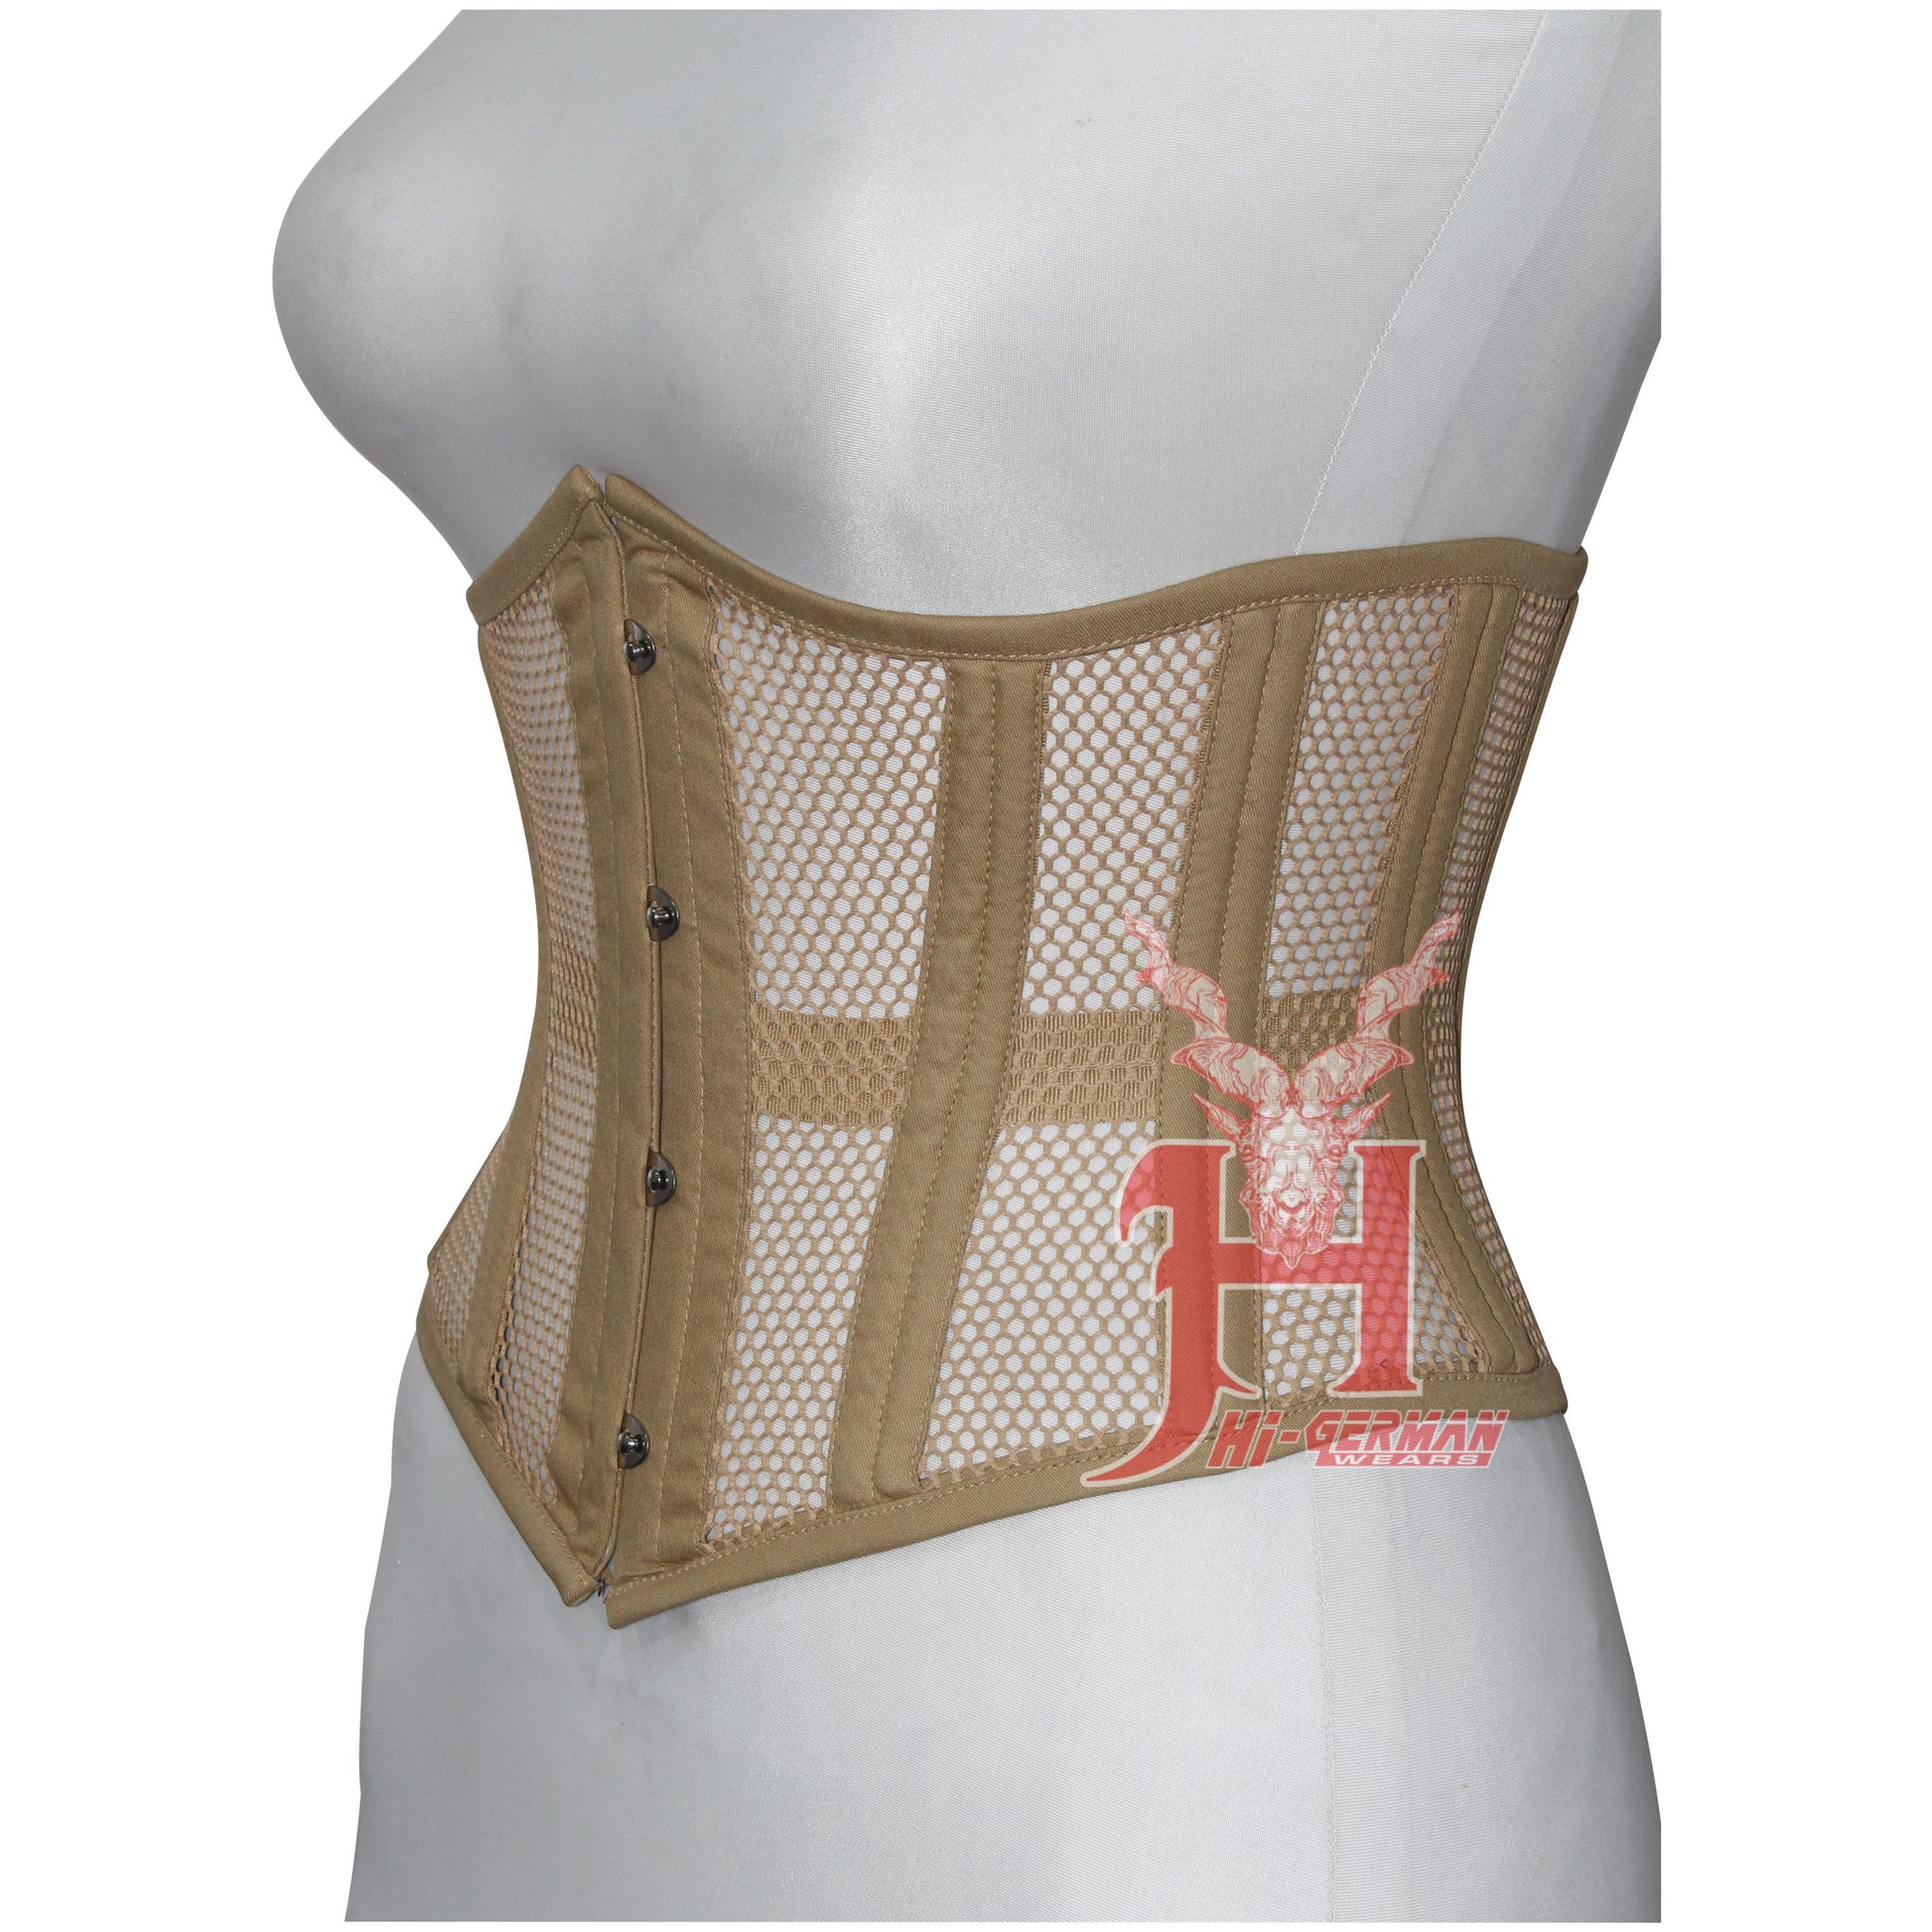 Body corset Basic Shaping 3508 (nu) de Chantelle. BMI.